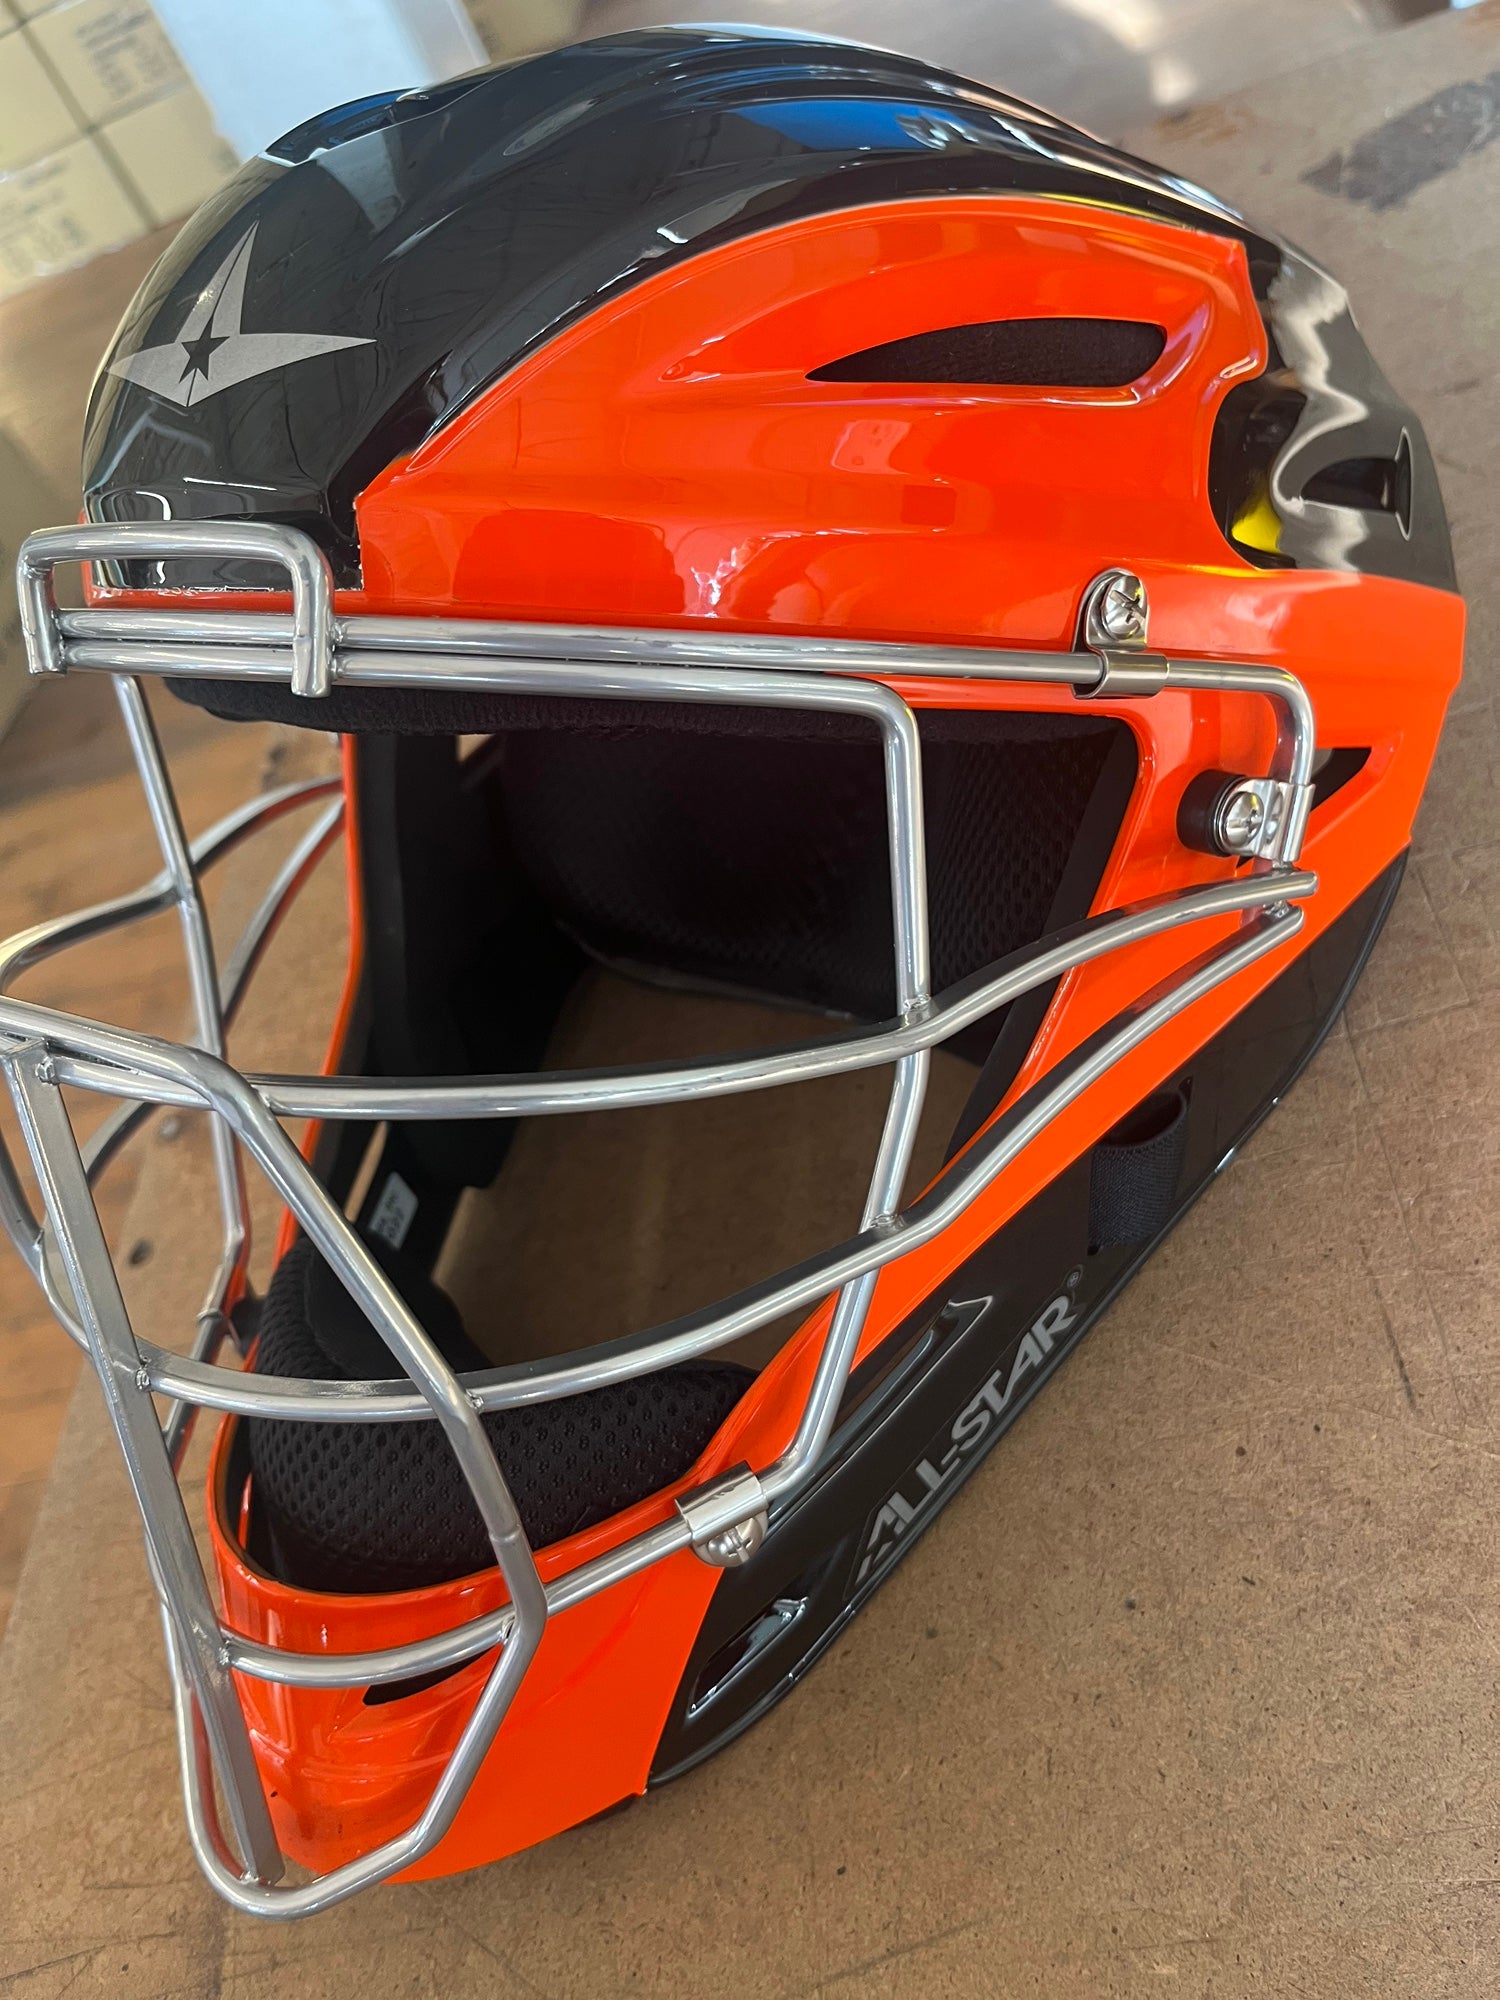 All Star System7 Axis Hockey Style Catcher's Helmet: MVP2500 / MVP2510